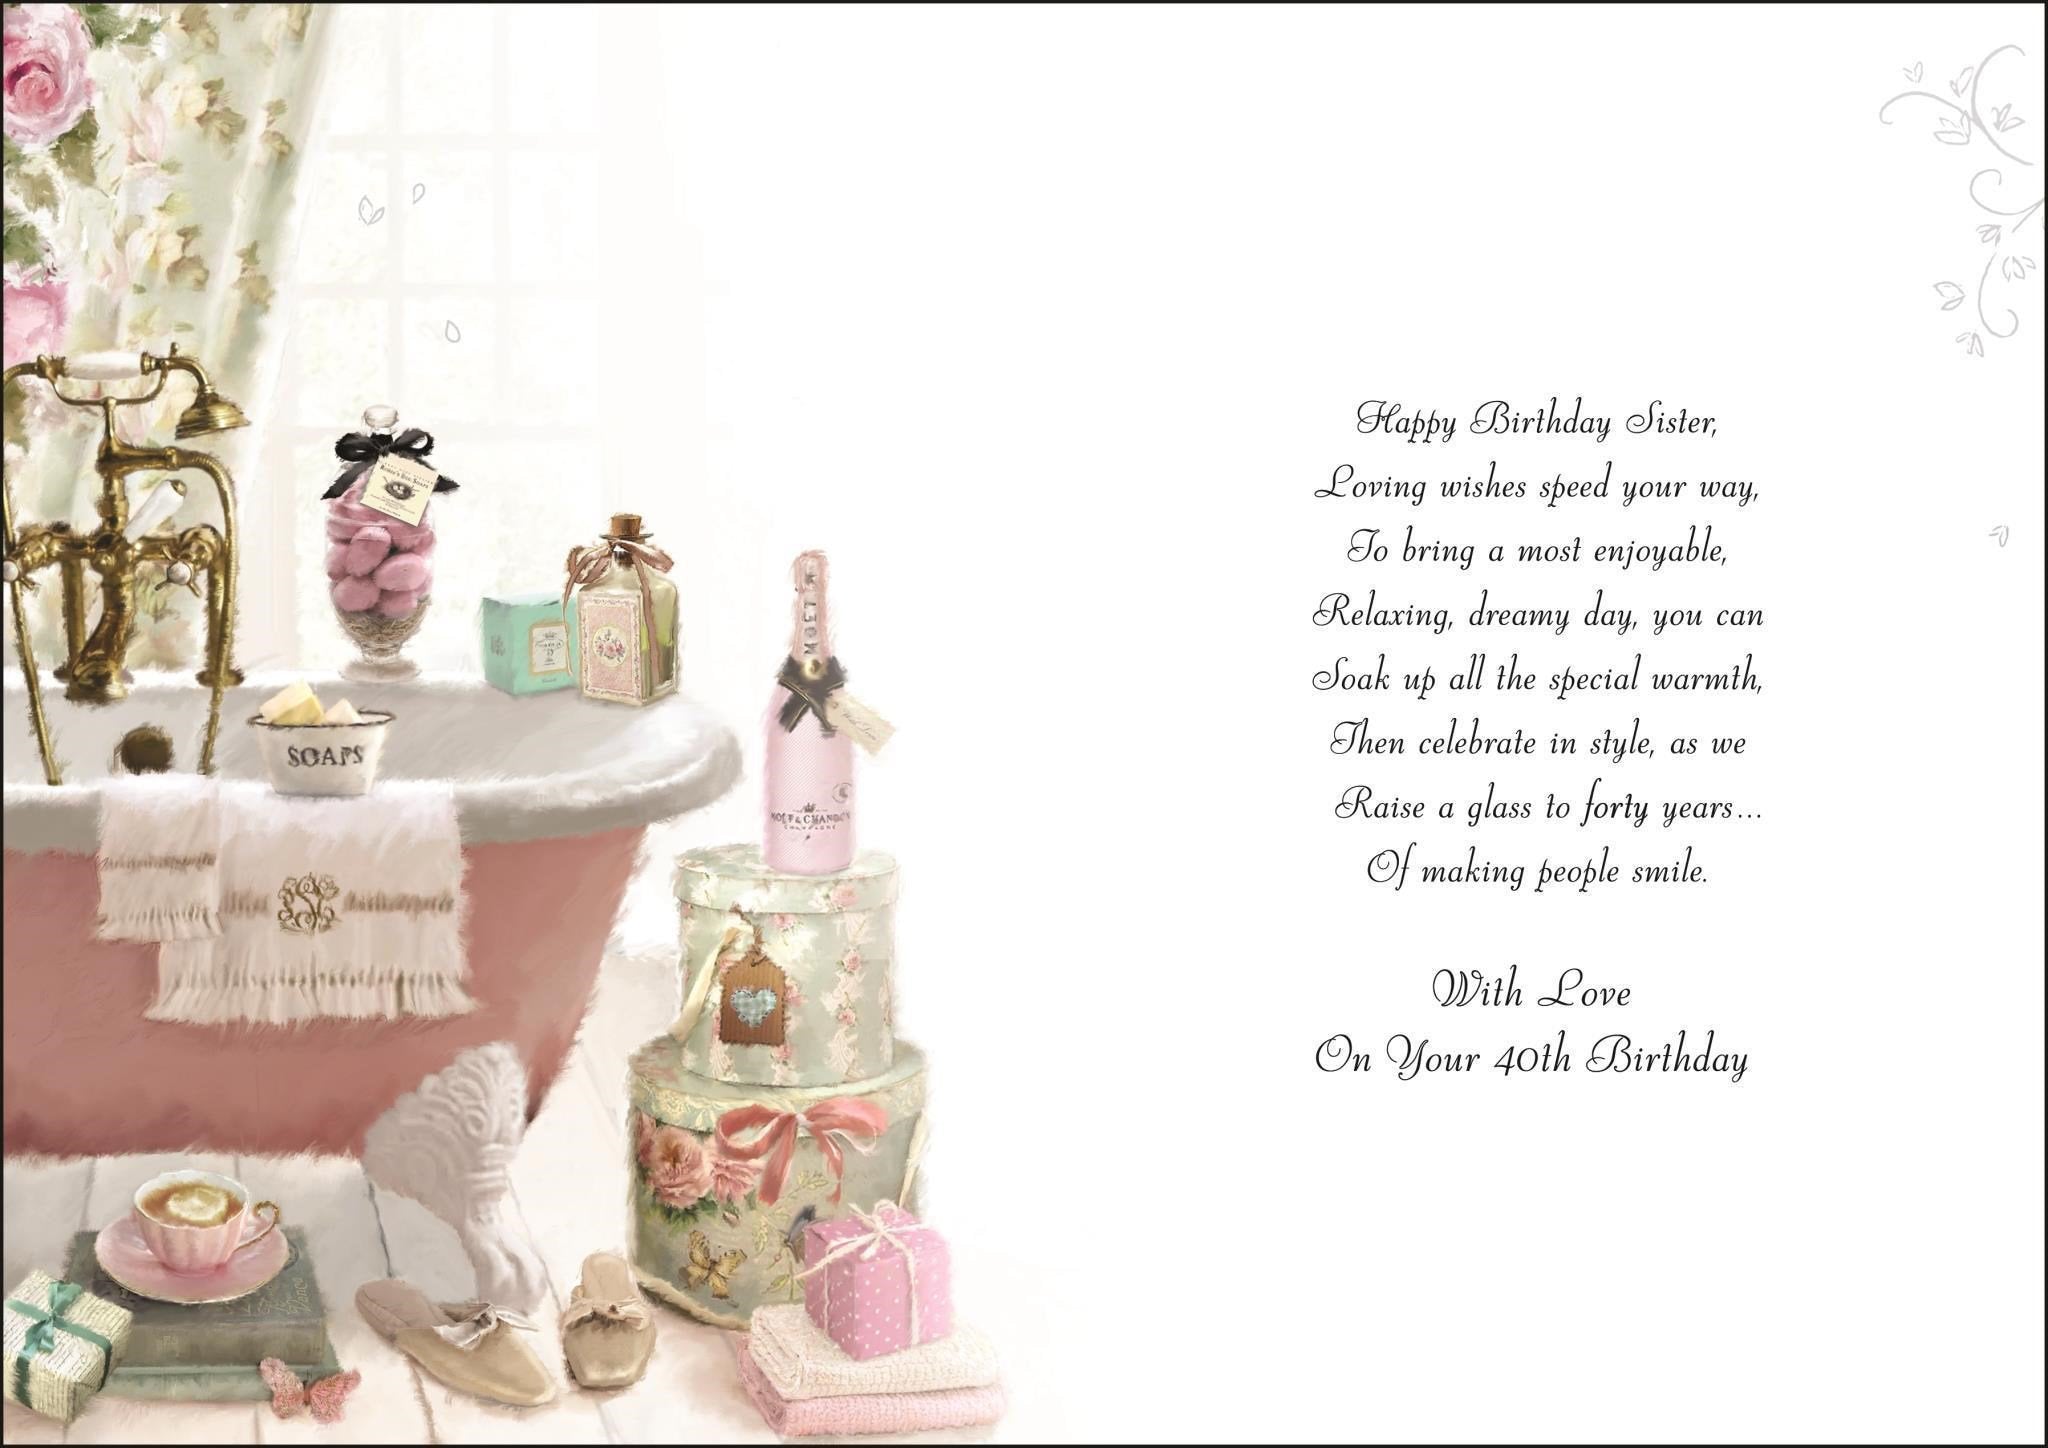 Inside of Sister 40th Birthday Bathroom Greetings Card